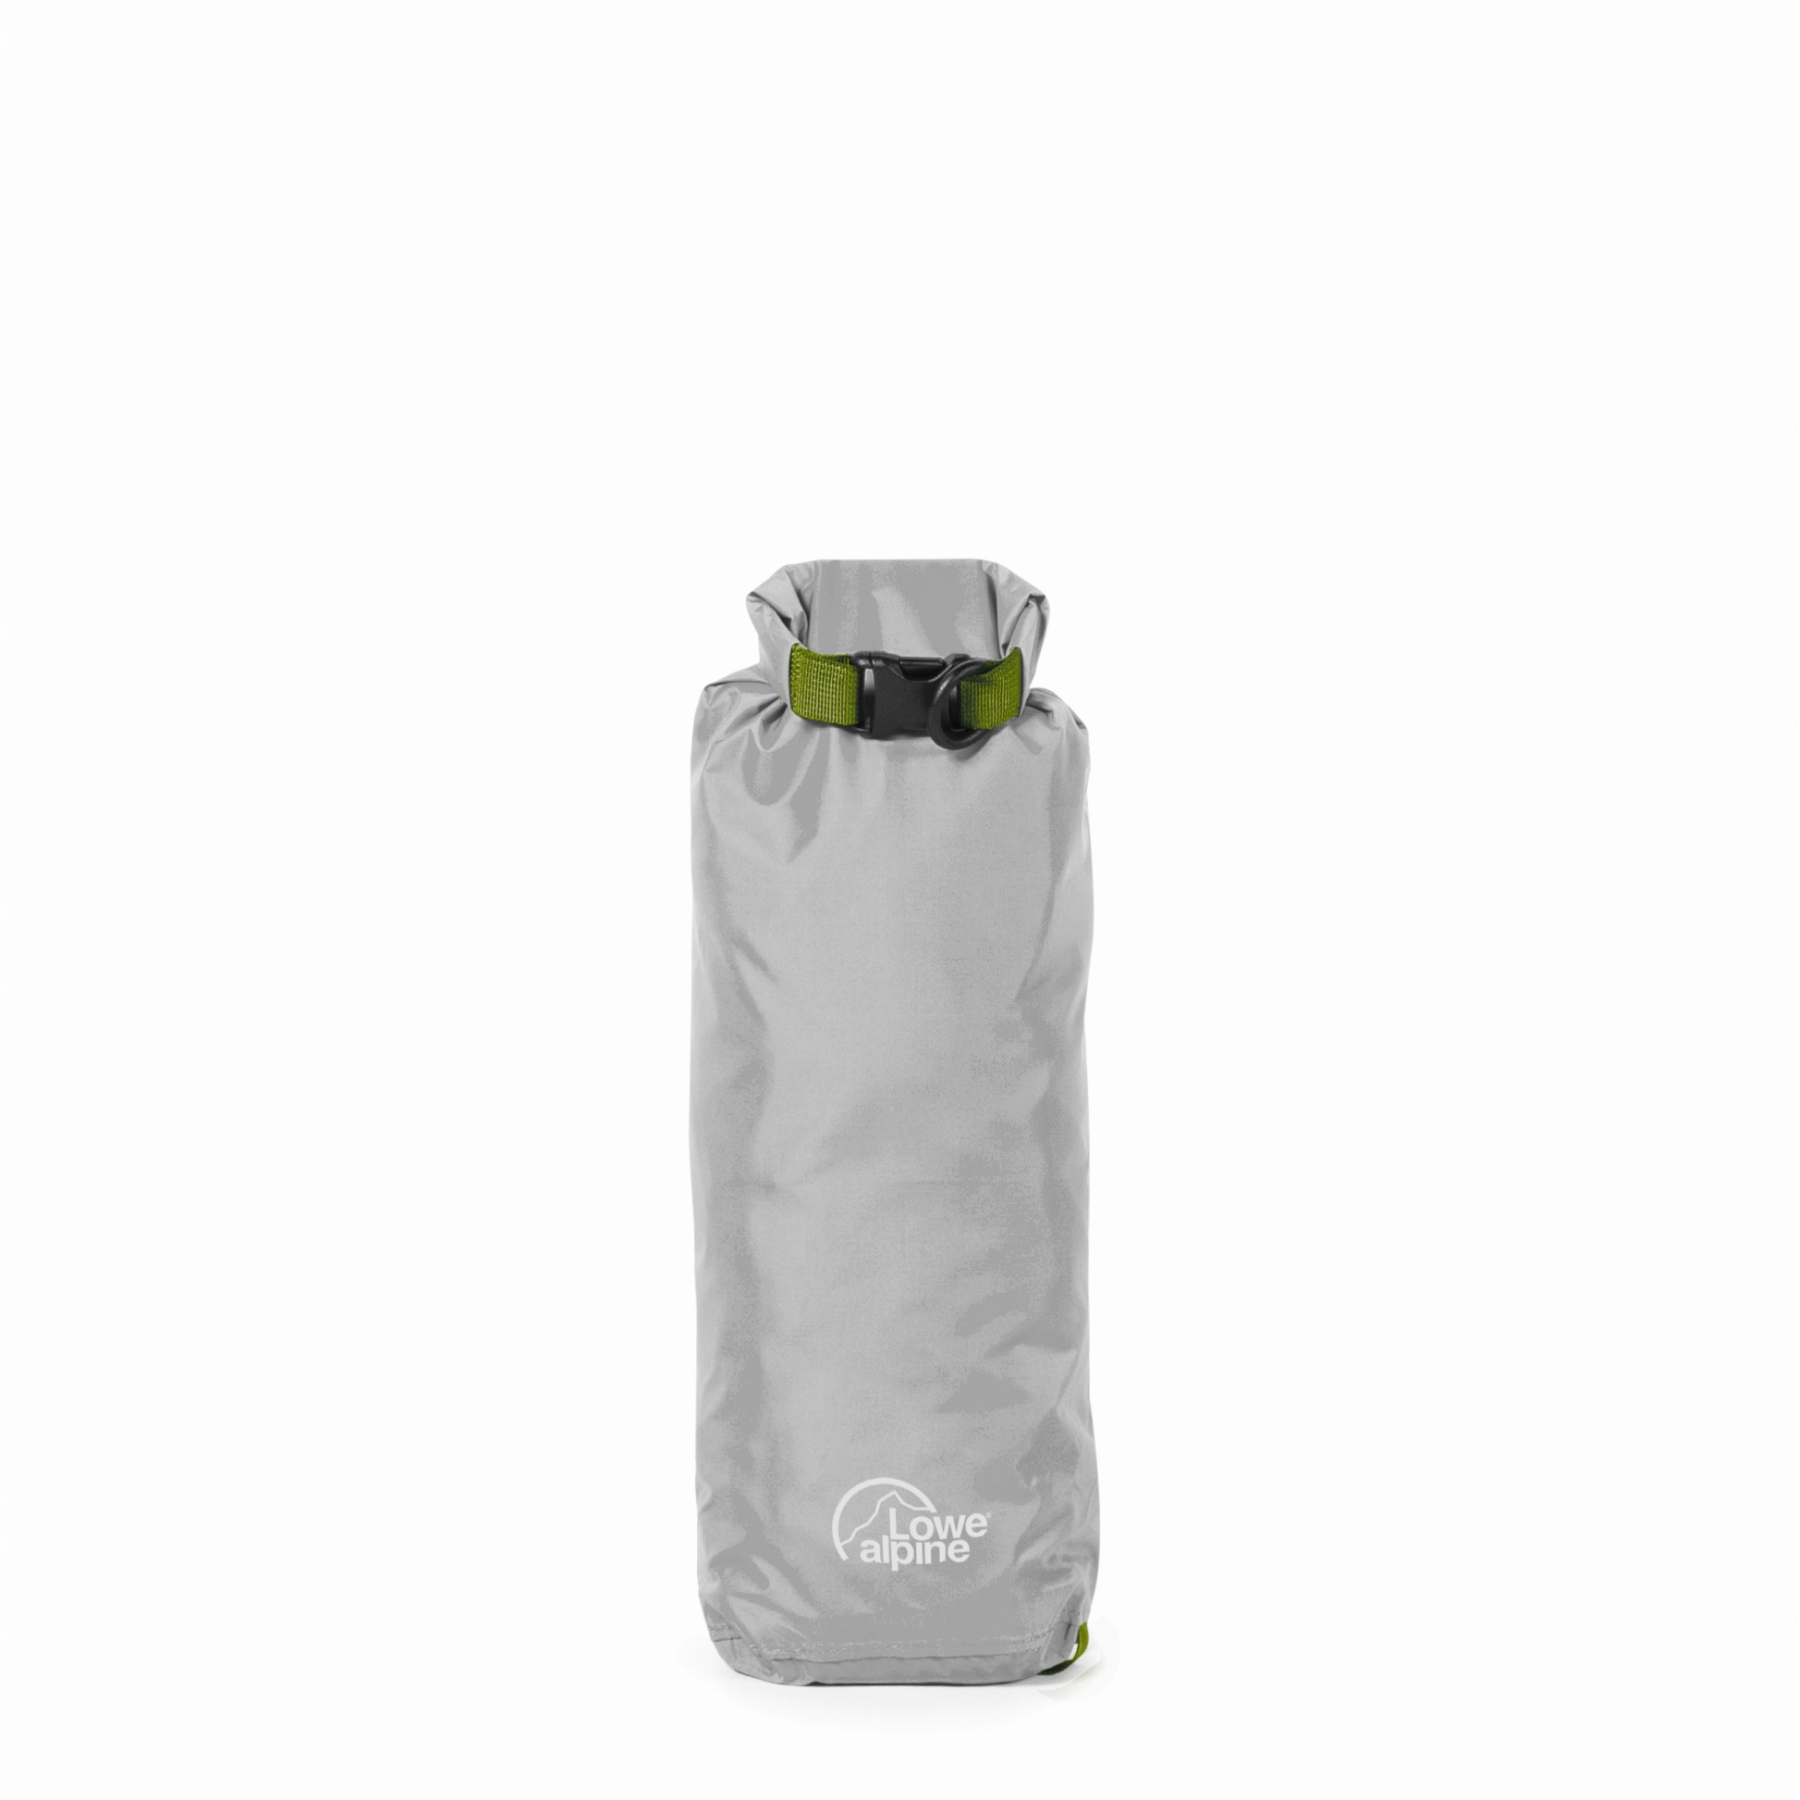 Productfoto van Lowe Alpine Ultralite - Dry Bag - 2.5L